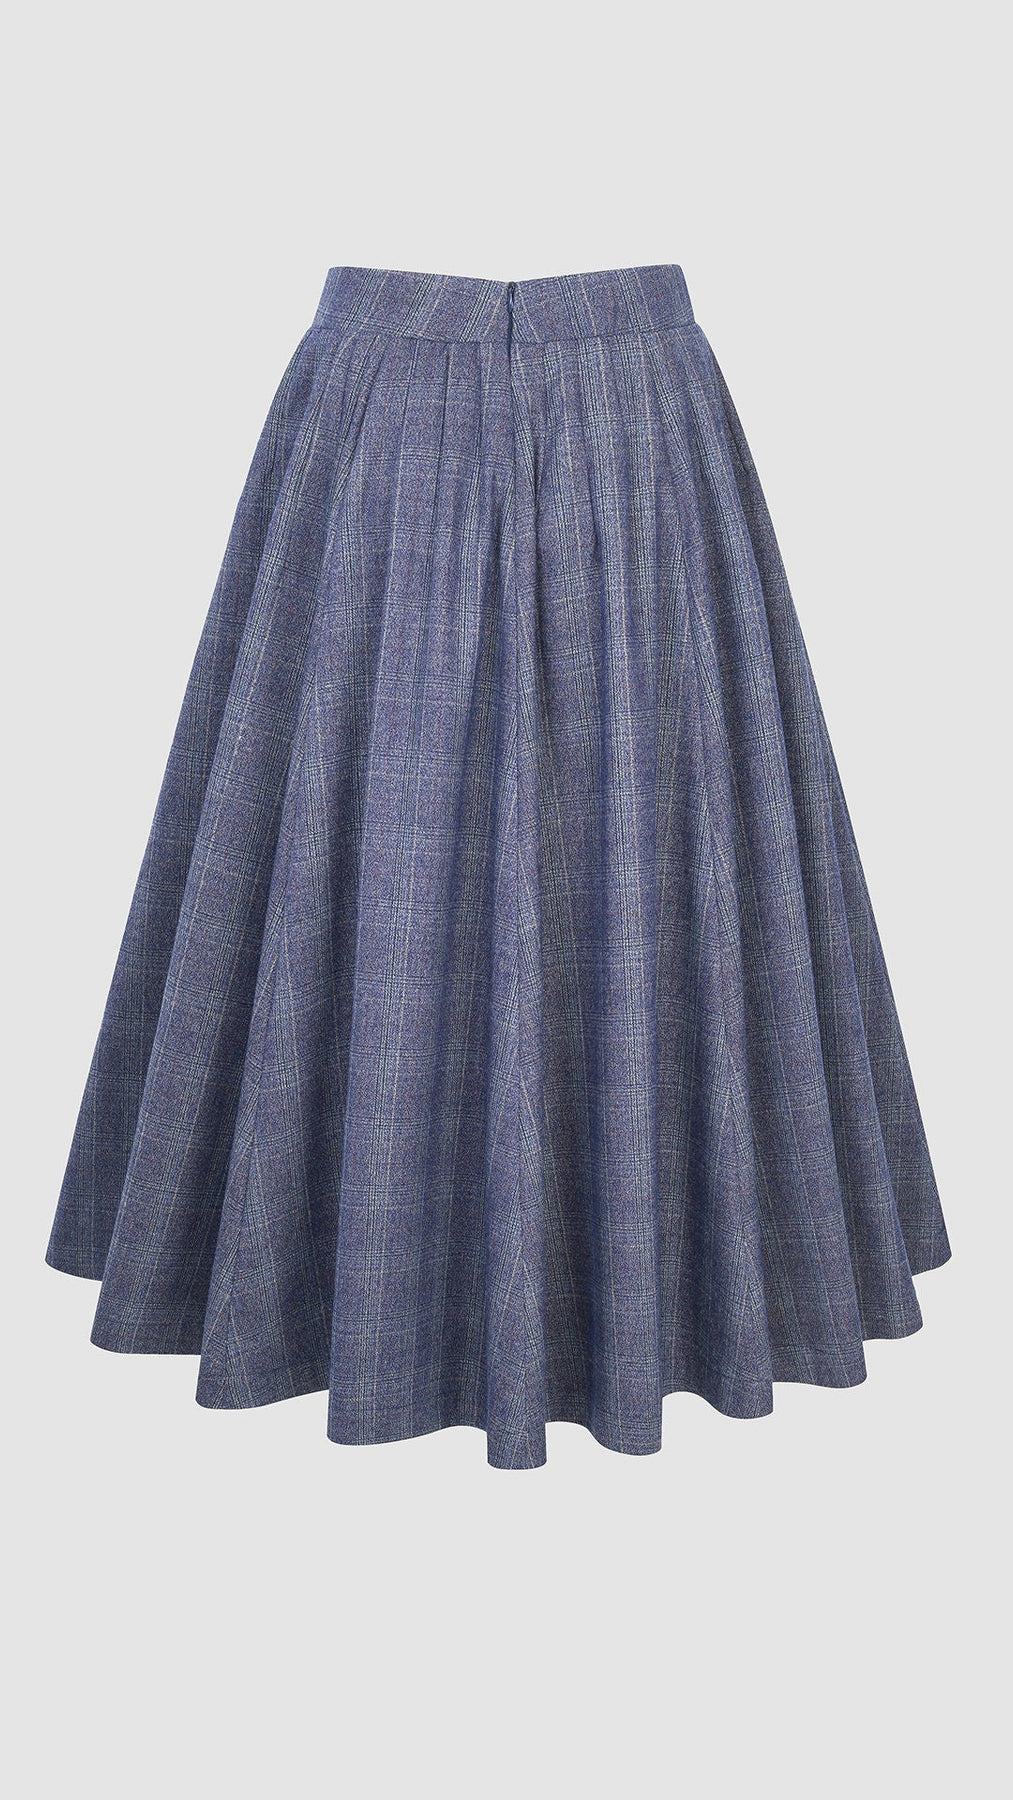 Future 4 | Tartan Wool Skirt in Blue – Linennaive